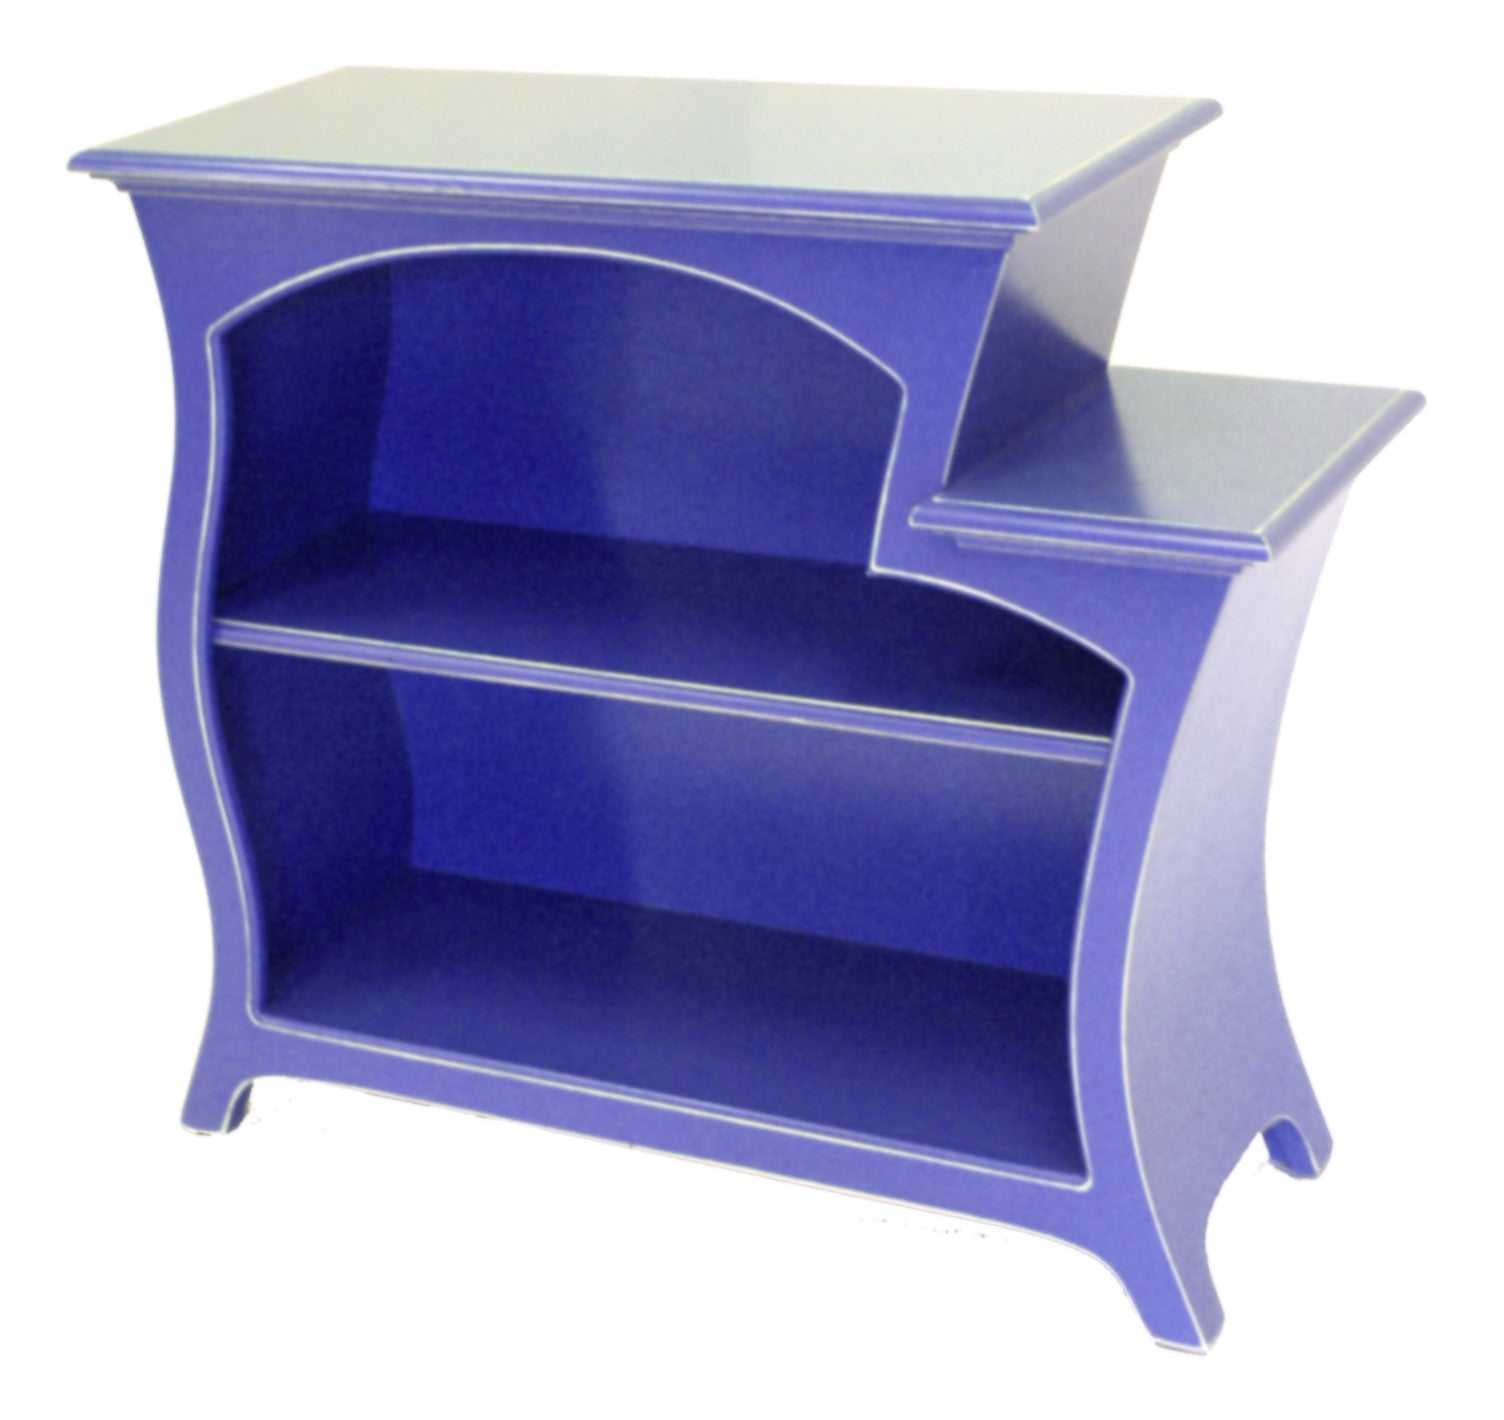 Curved Accent Bookcase - Cobalt Blue Paint - dust furniture*